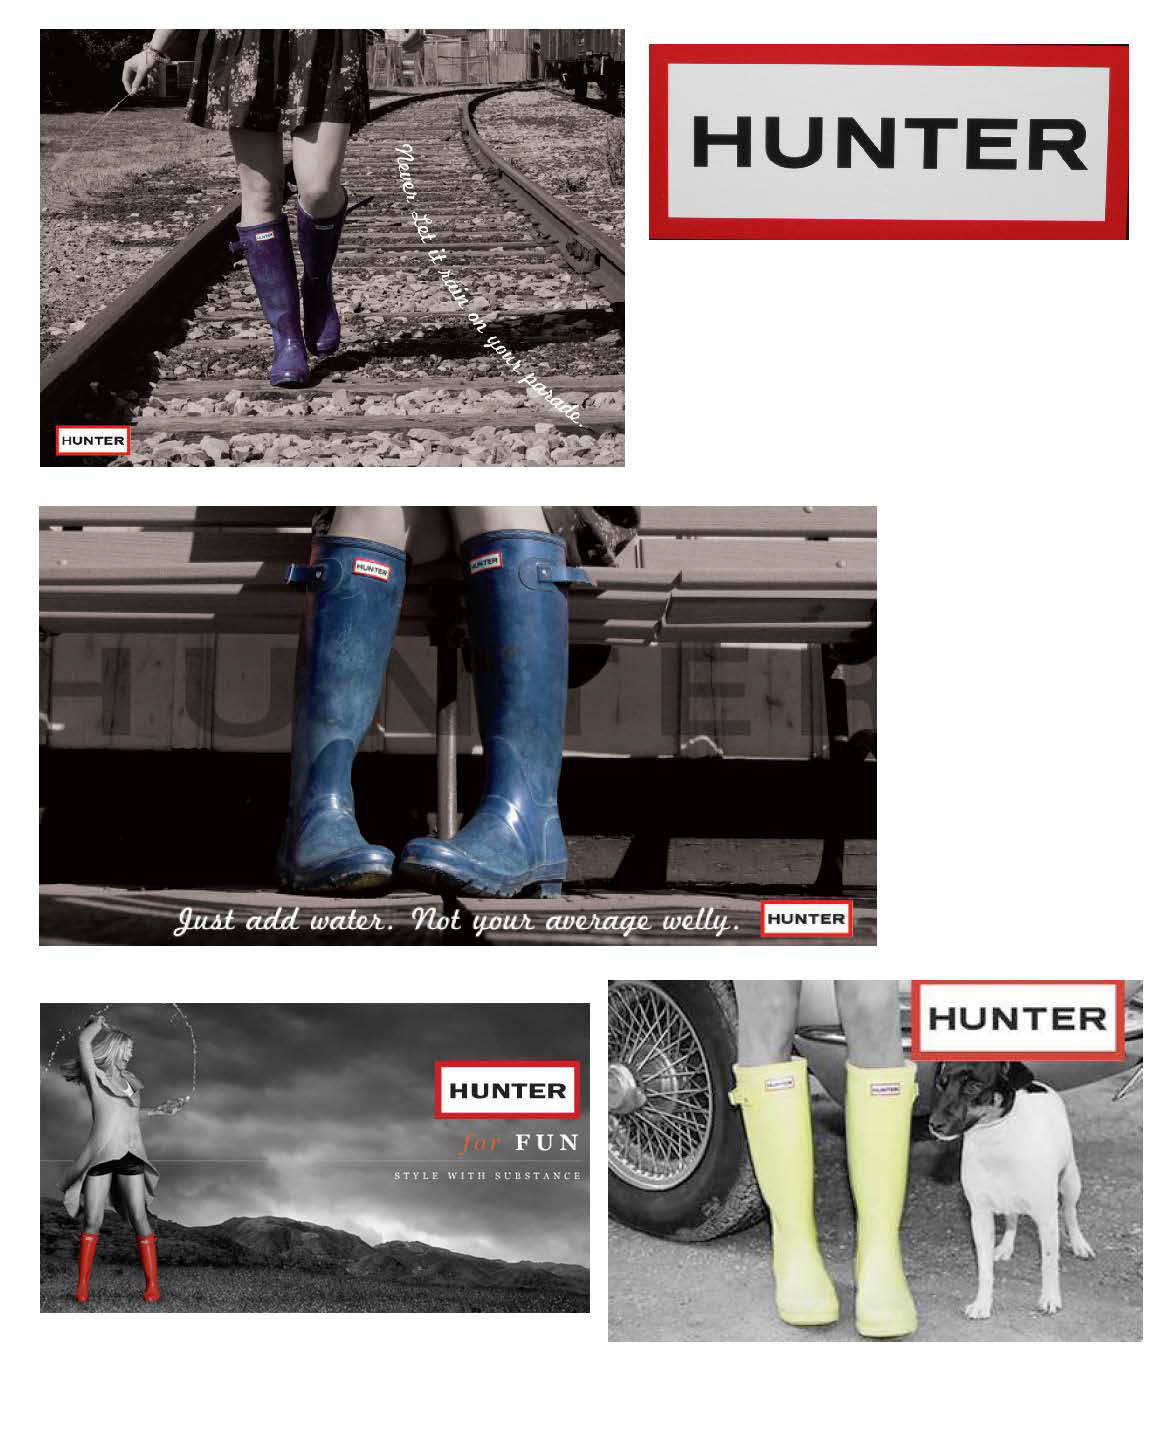 Photo Composite Vans hunter Celine advertisement Project